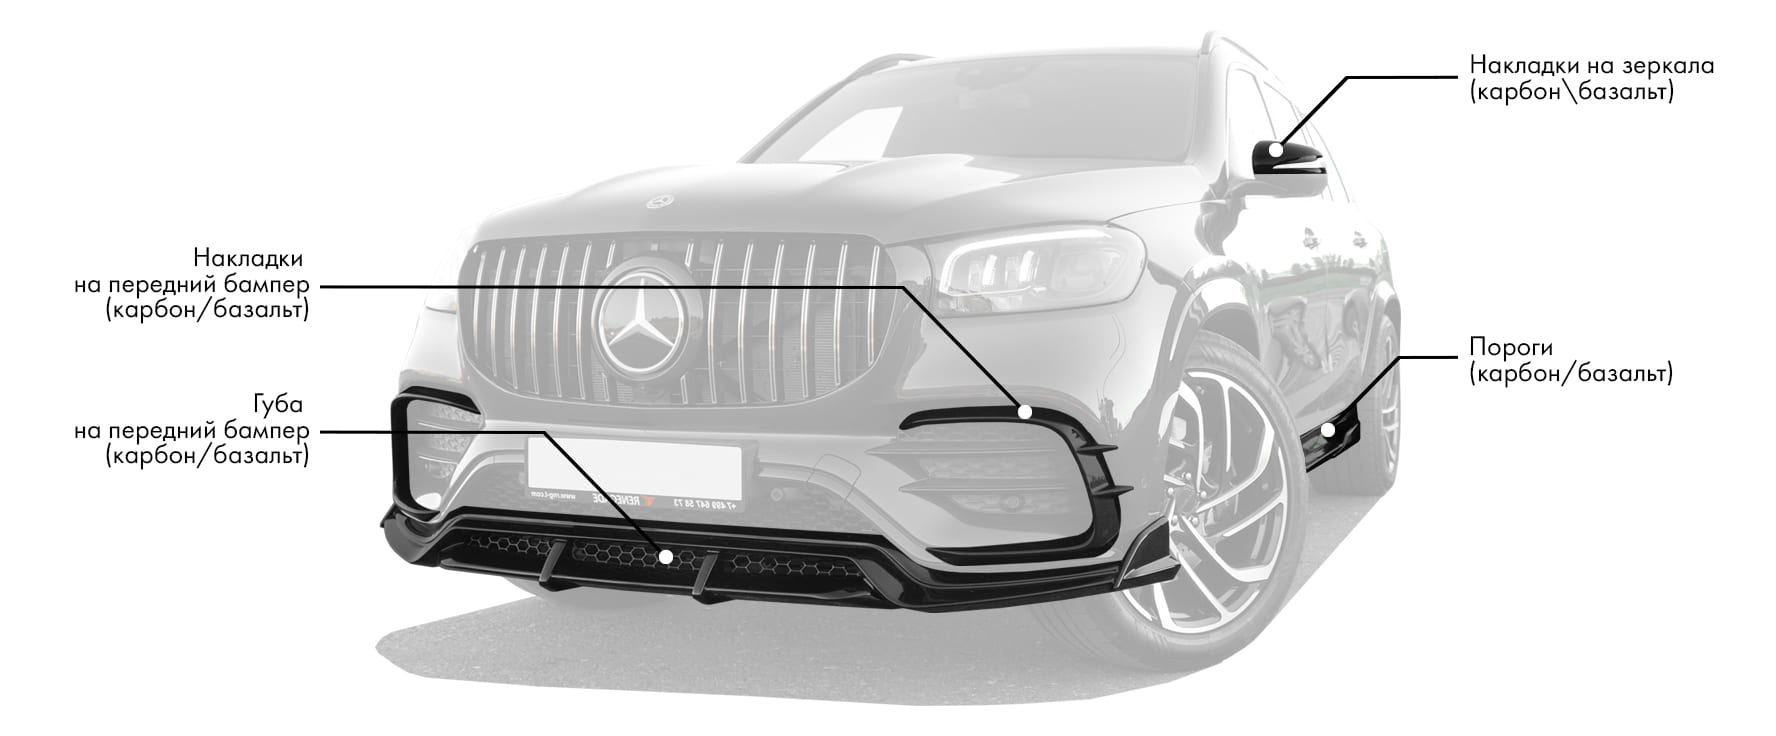 Обвес на Mercedes-Benz GLS X167 включает